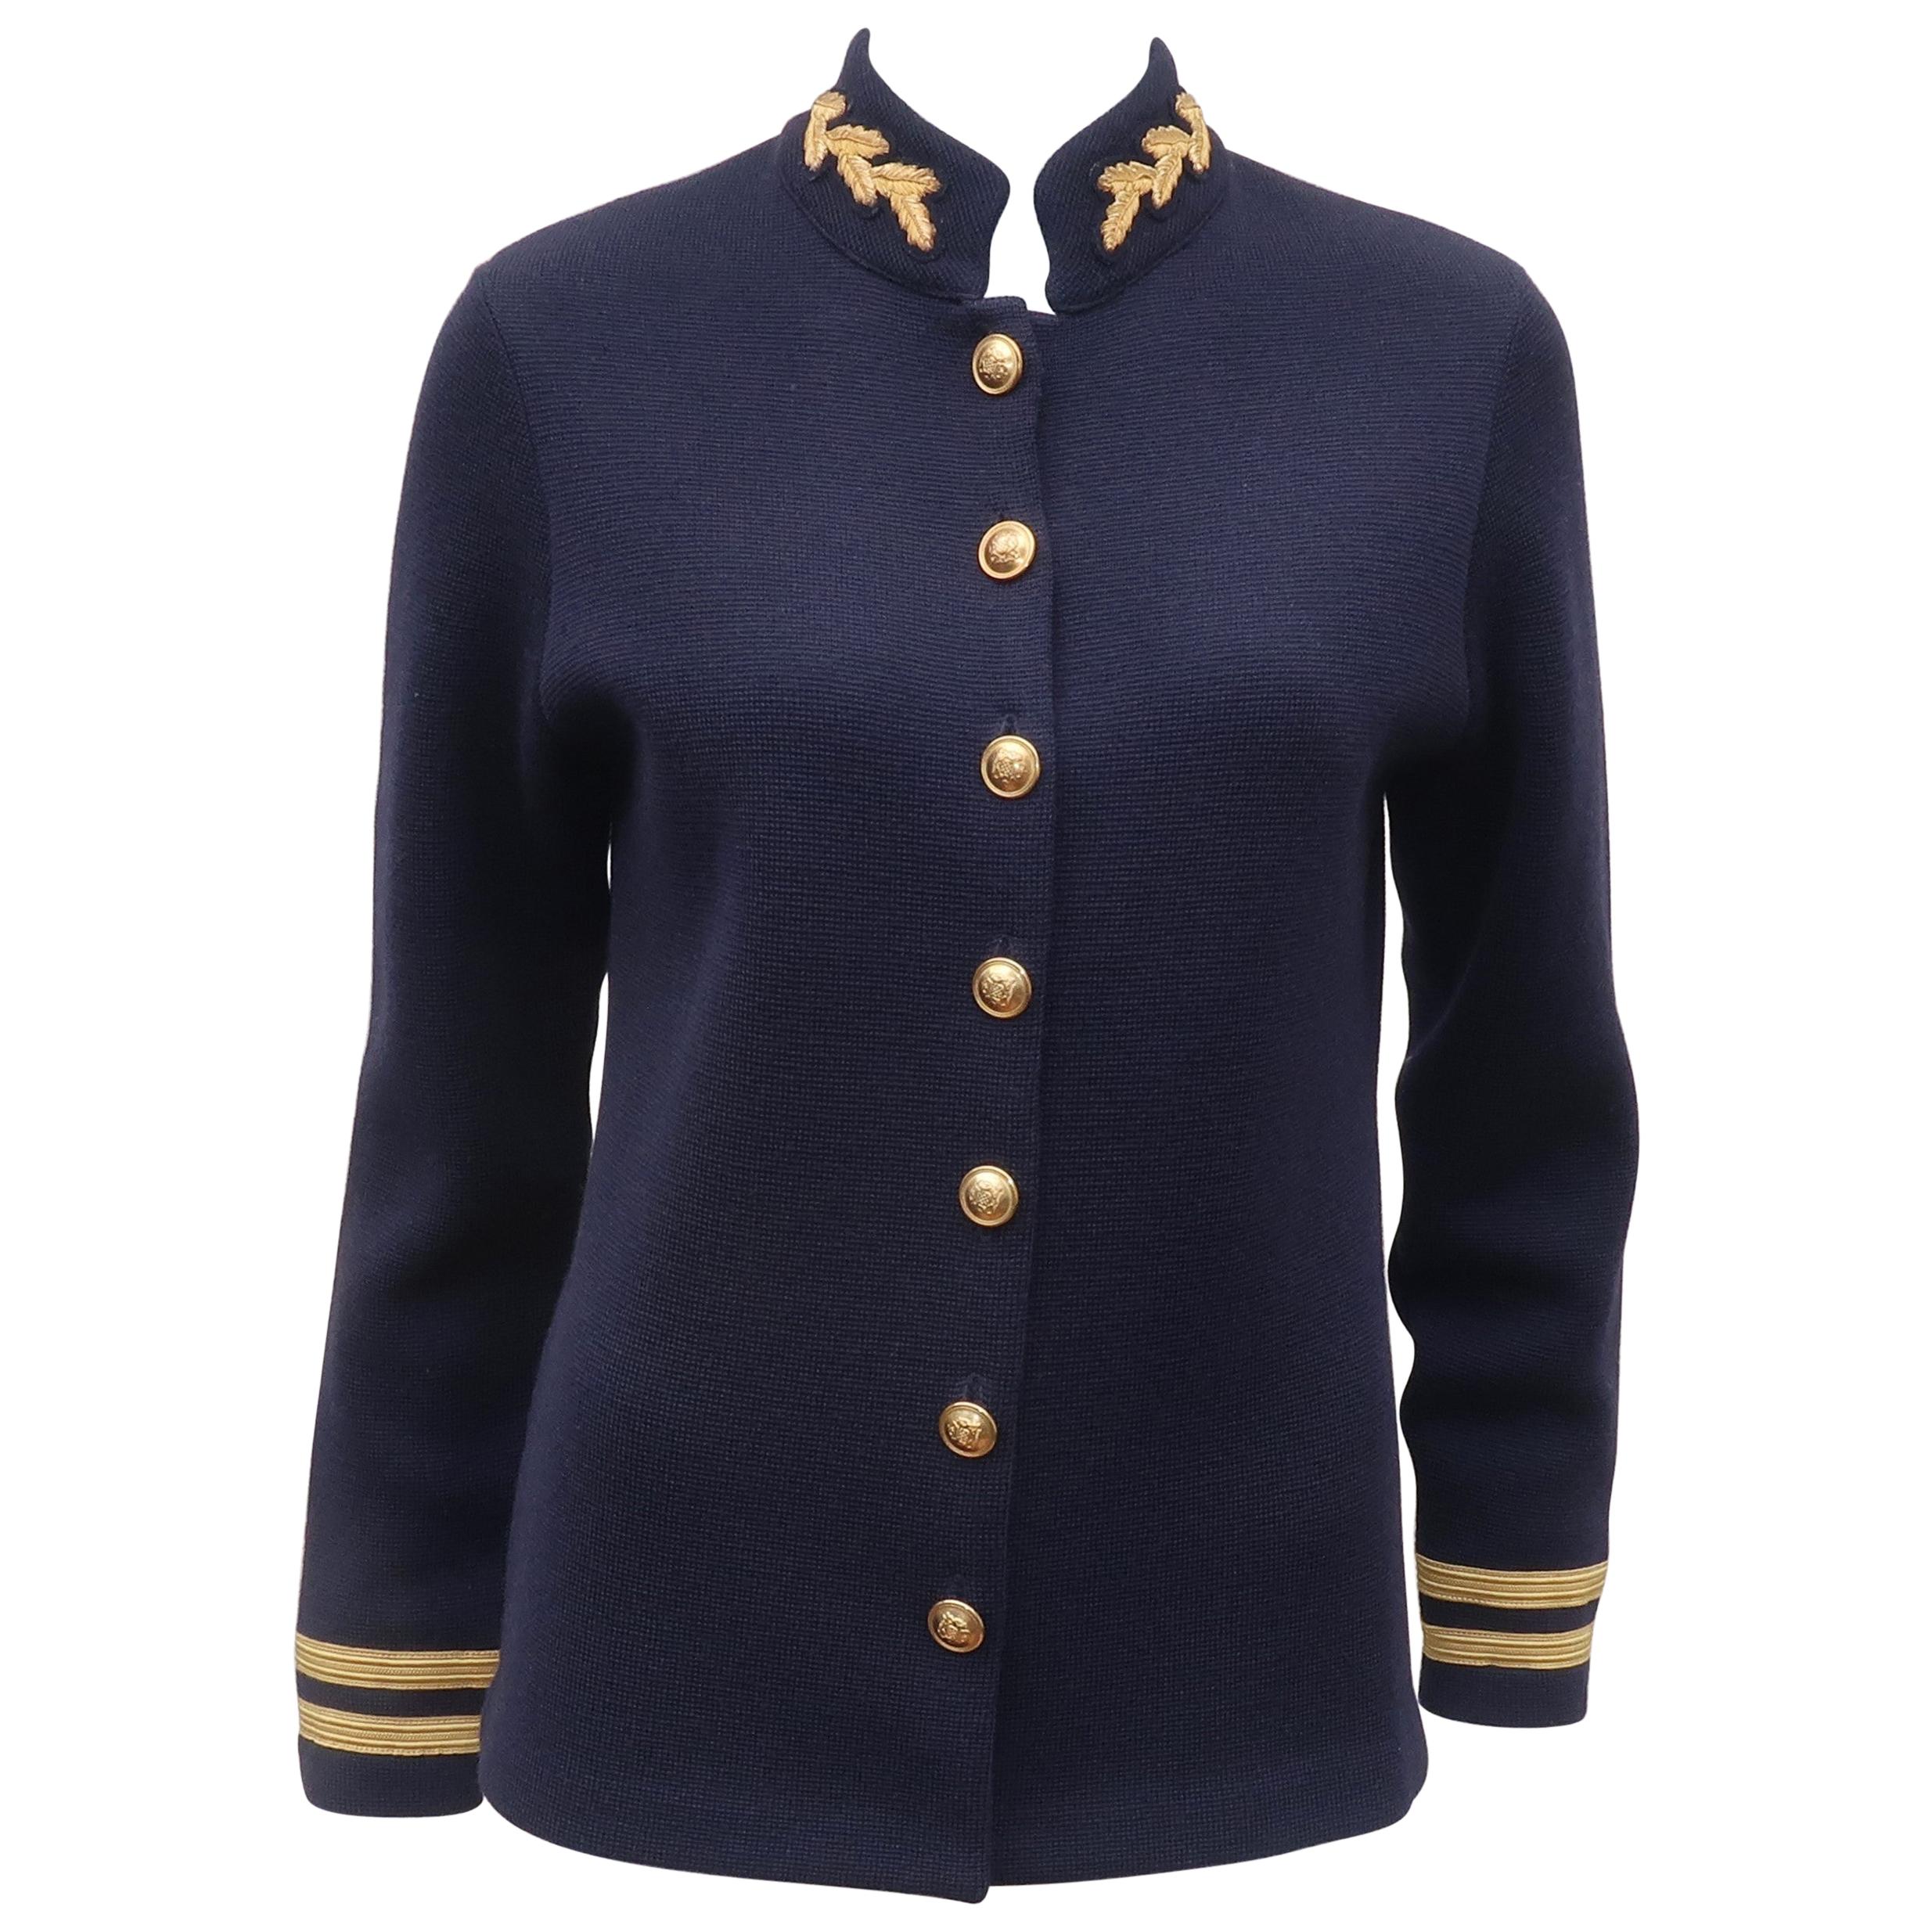 Ralph Lauren Military Navy Blue & Gold Wool Sweater Jacket, 1990's